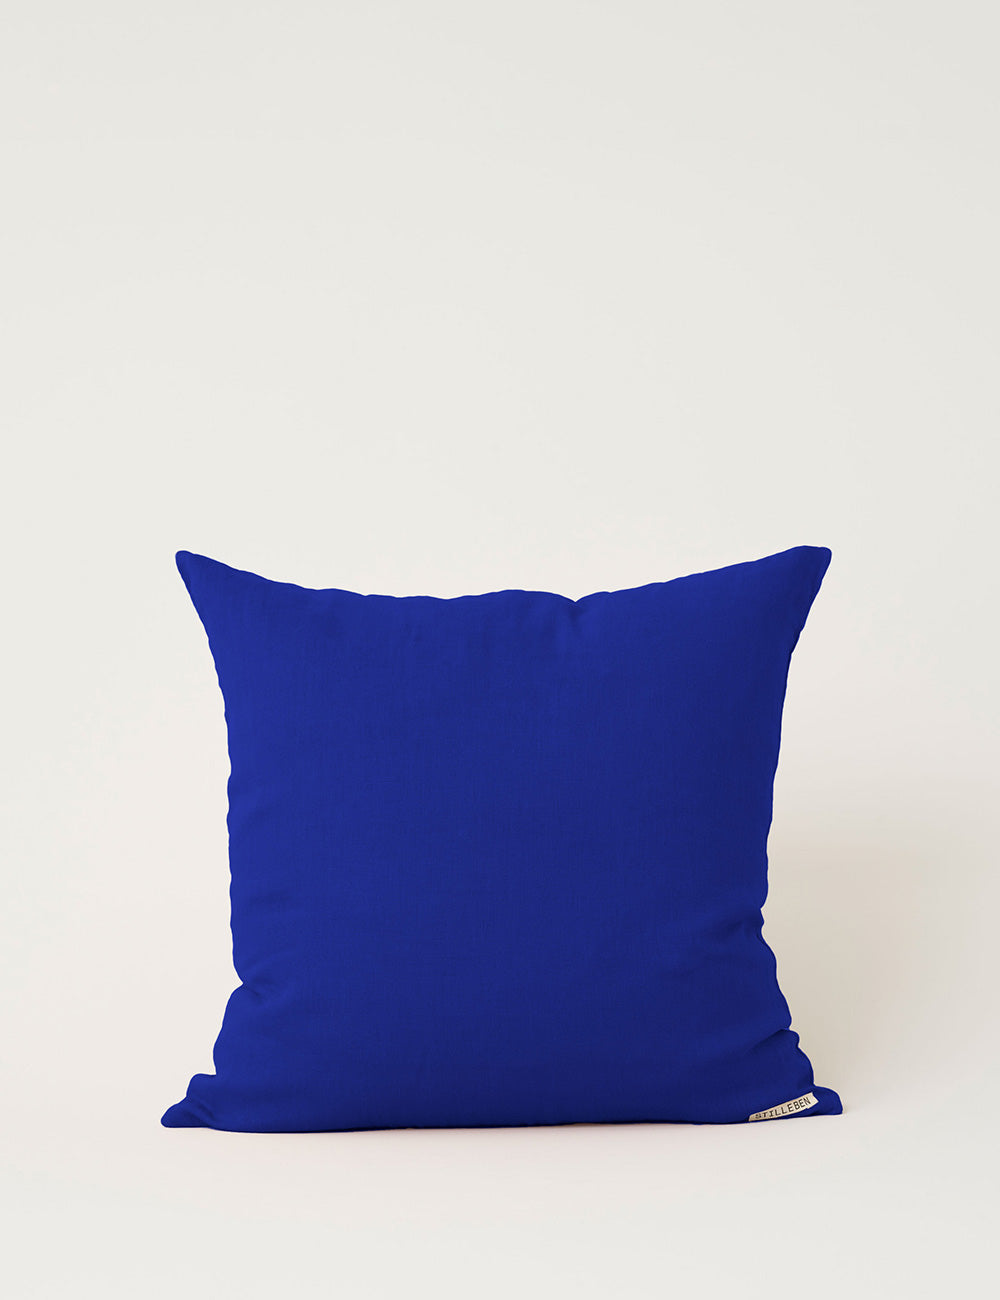 Stilleben cushion cover 50 x 50 cobalt